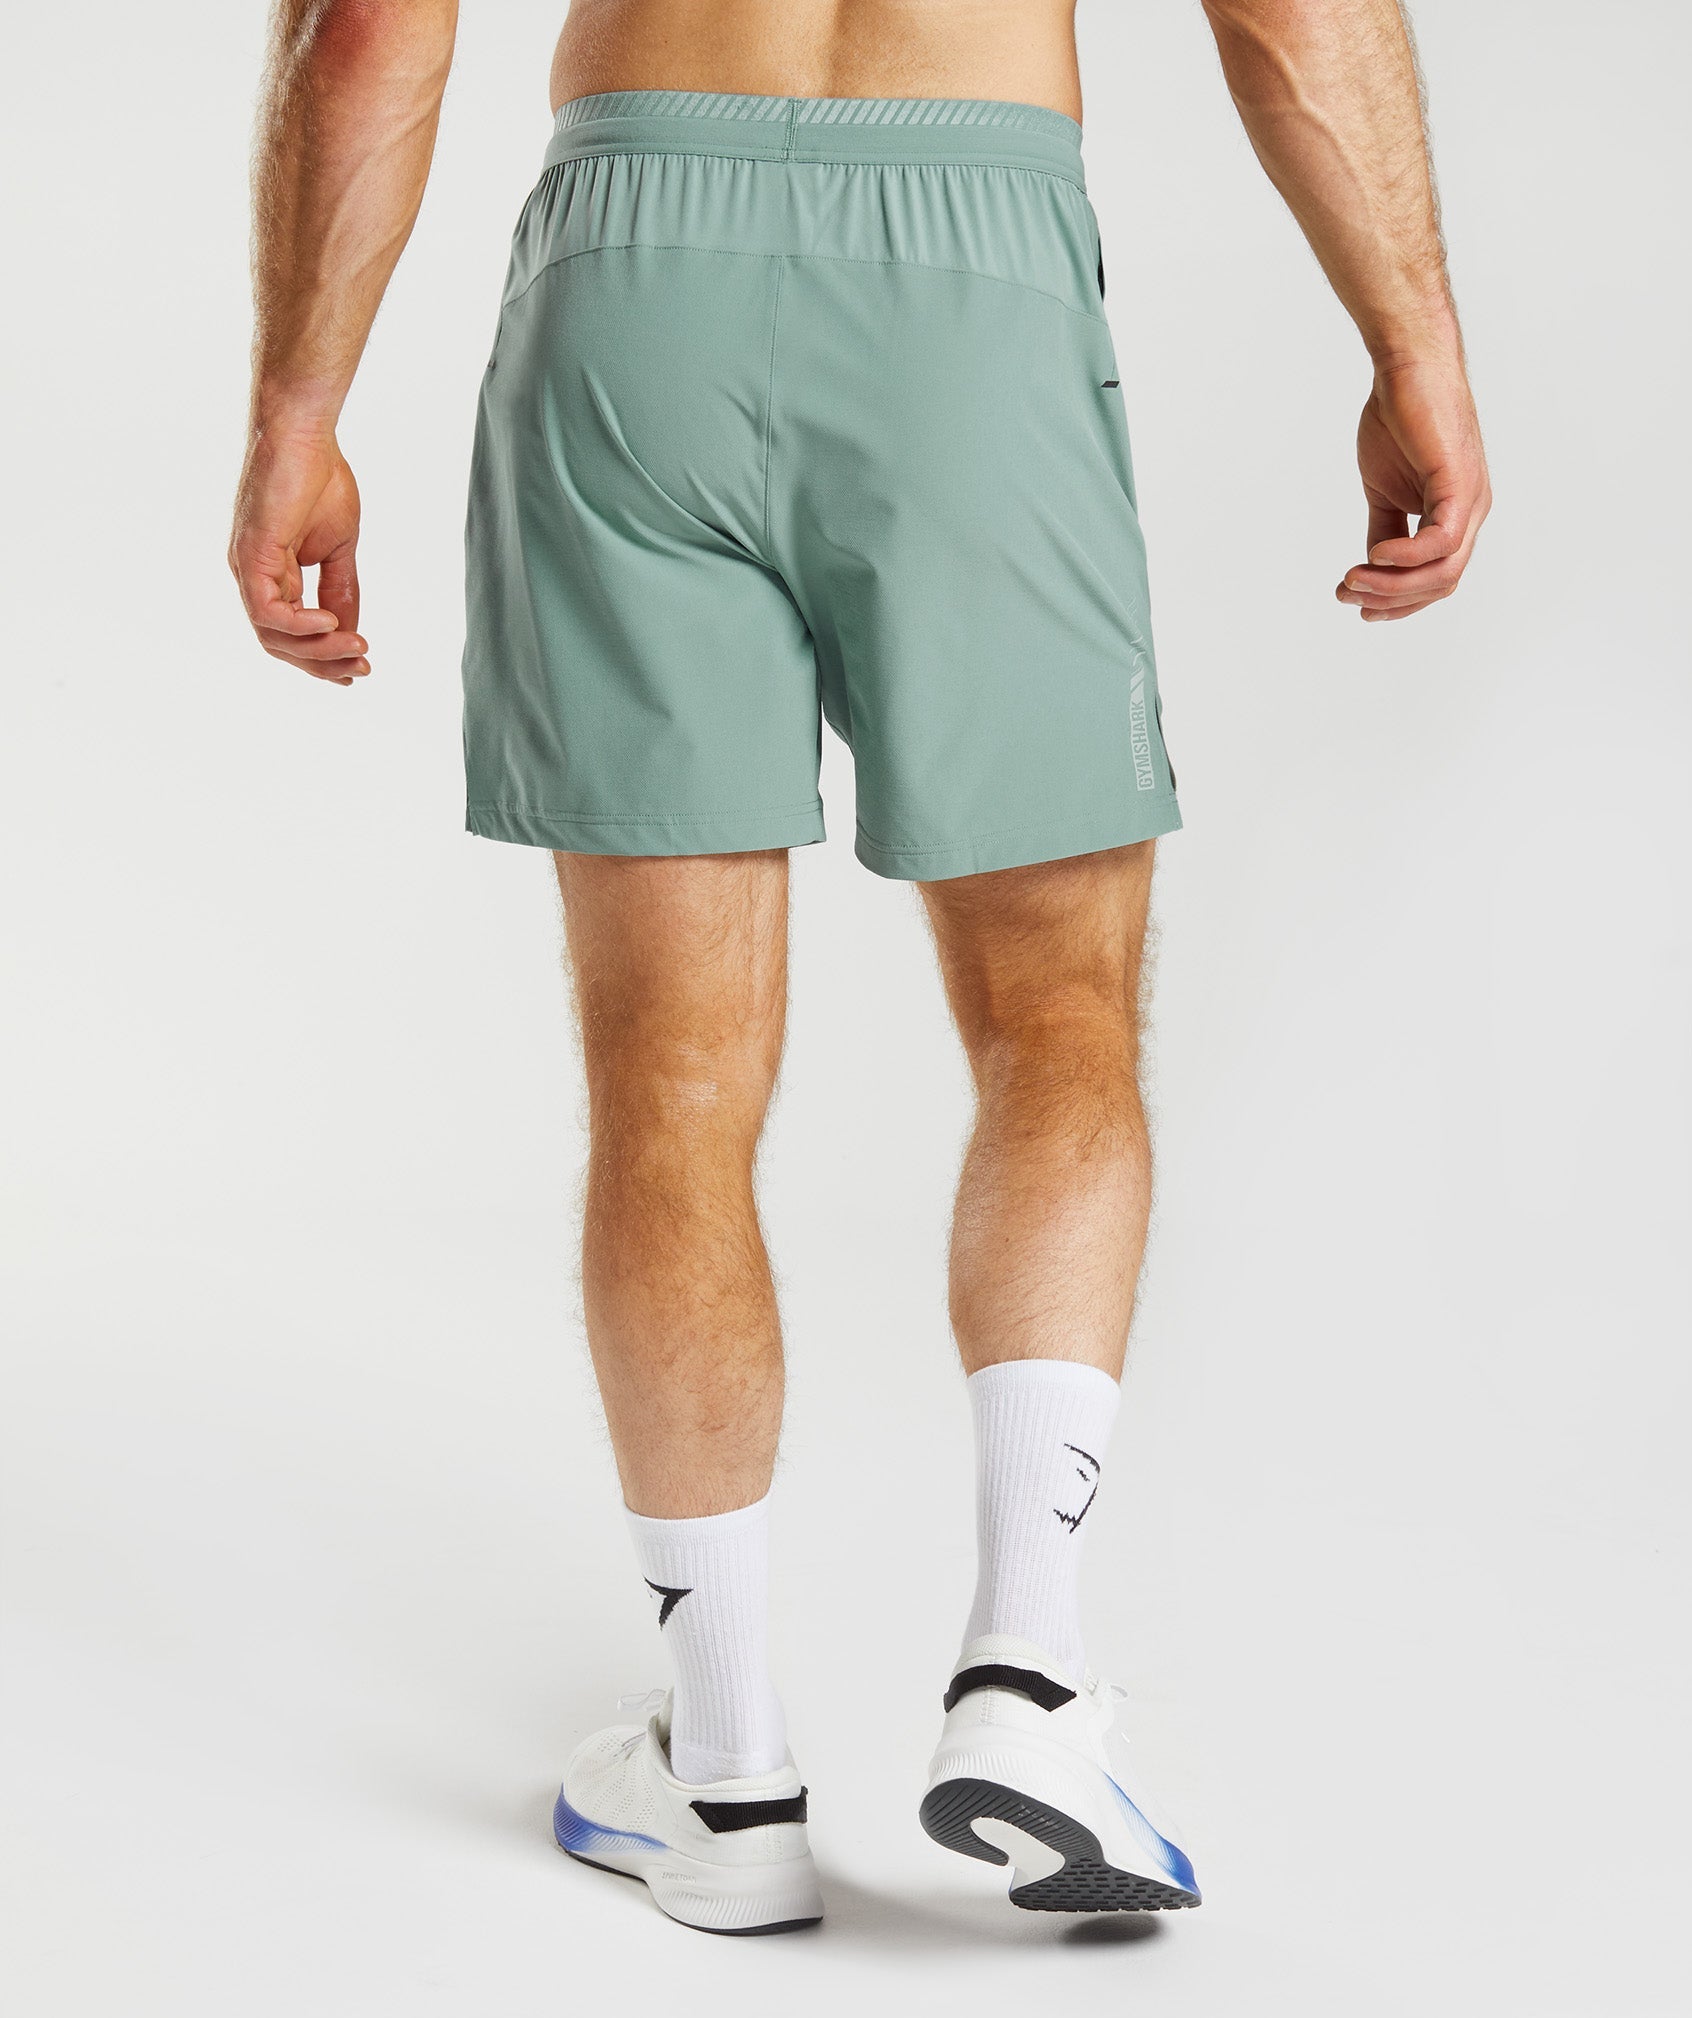 Apex 7" Hybrid Shorts in Ink Teal